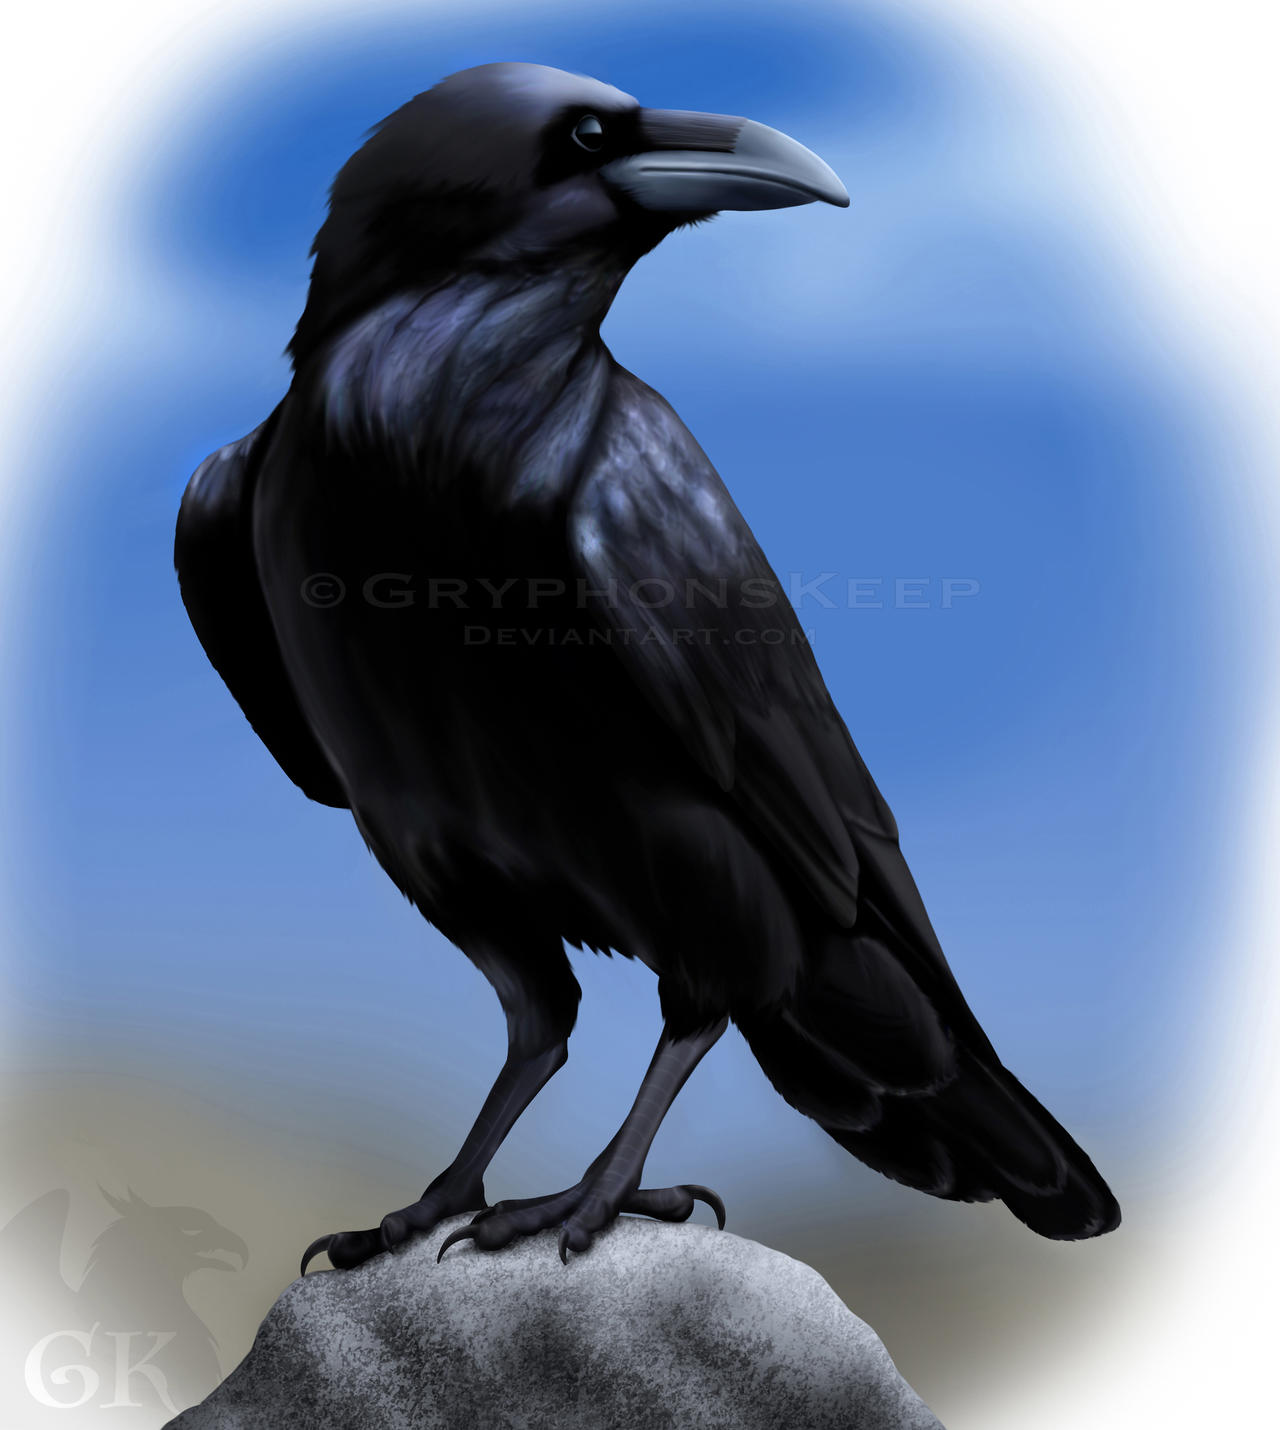 Raven Speedpaint by GryphonsKeep on DeviantArt